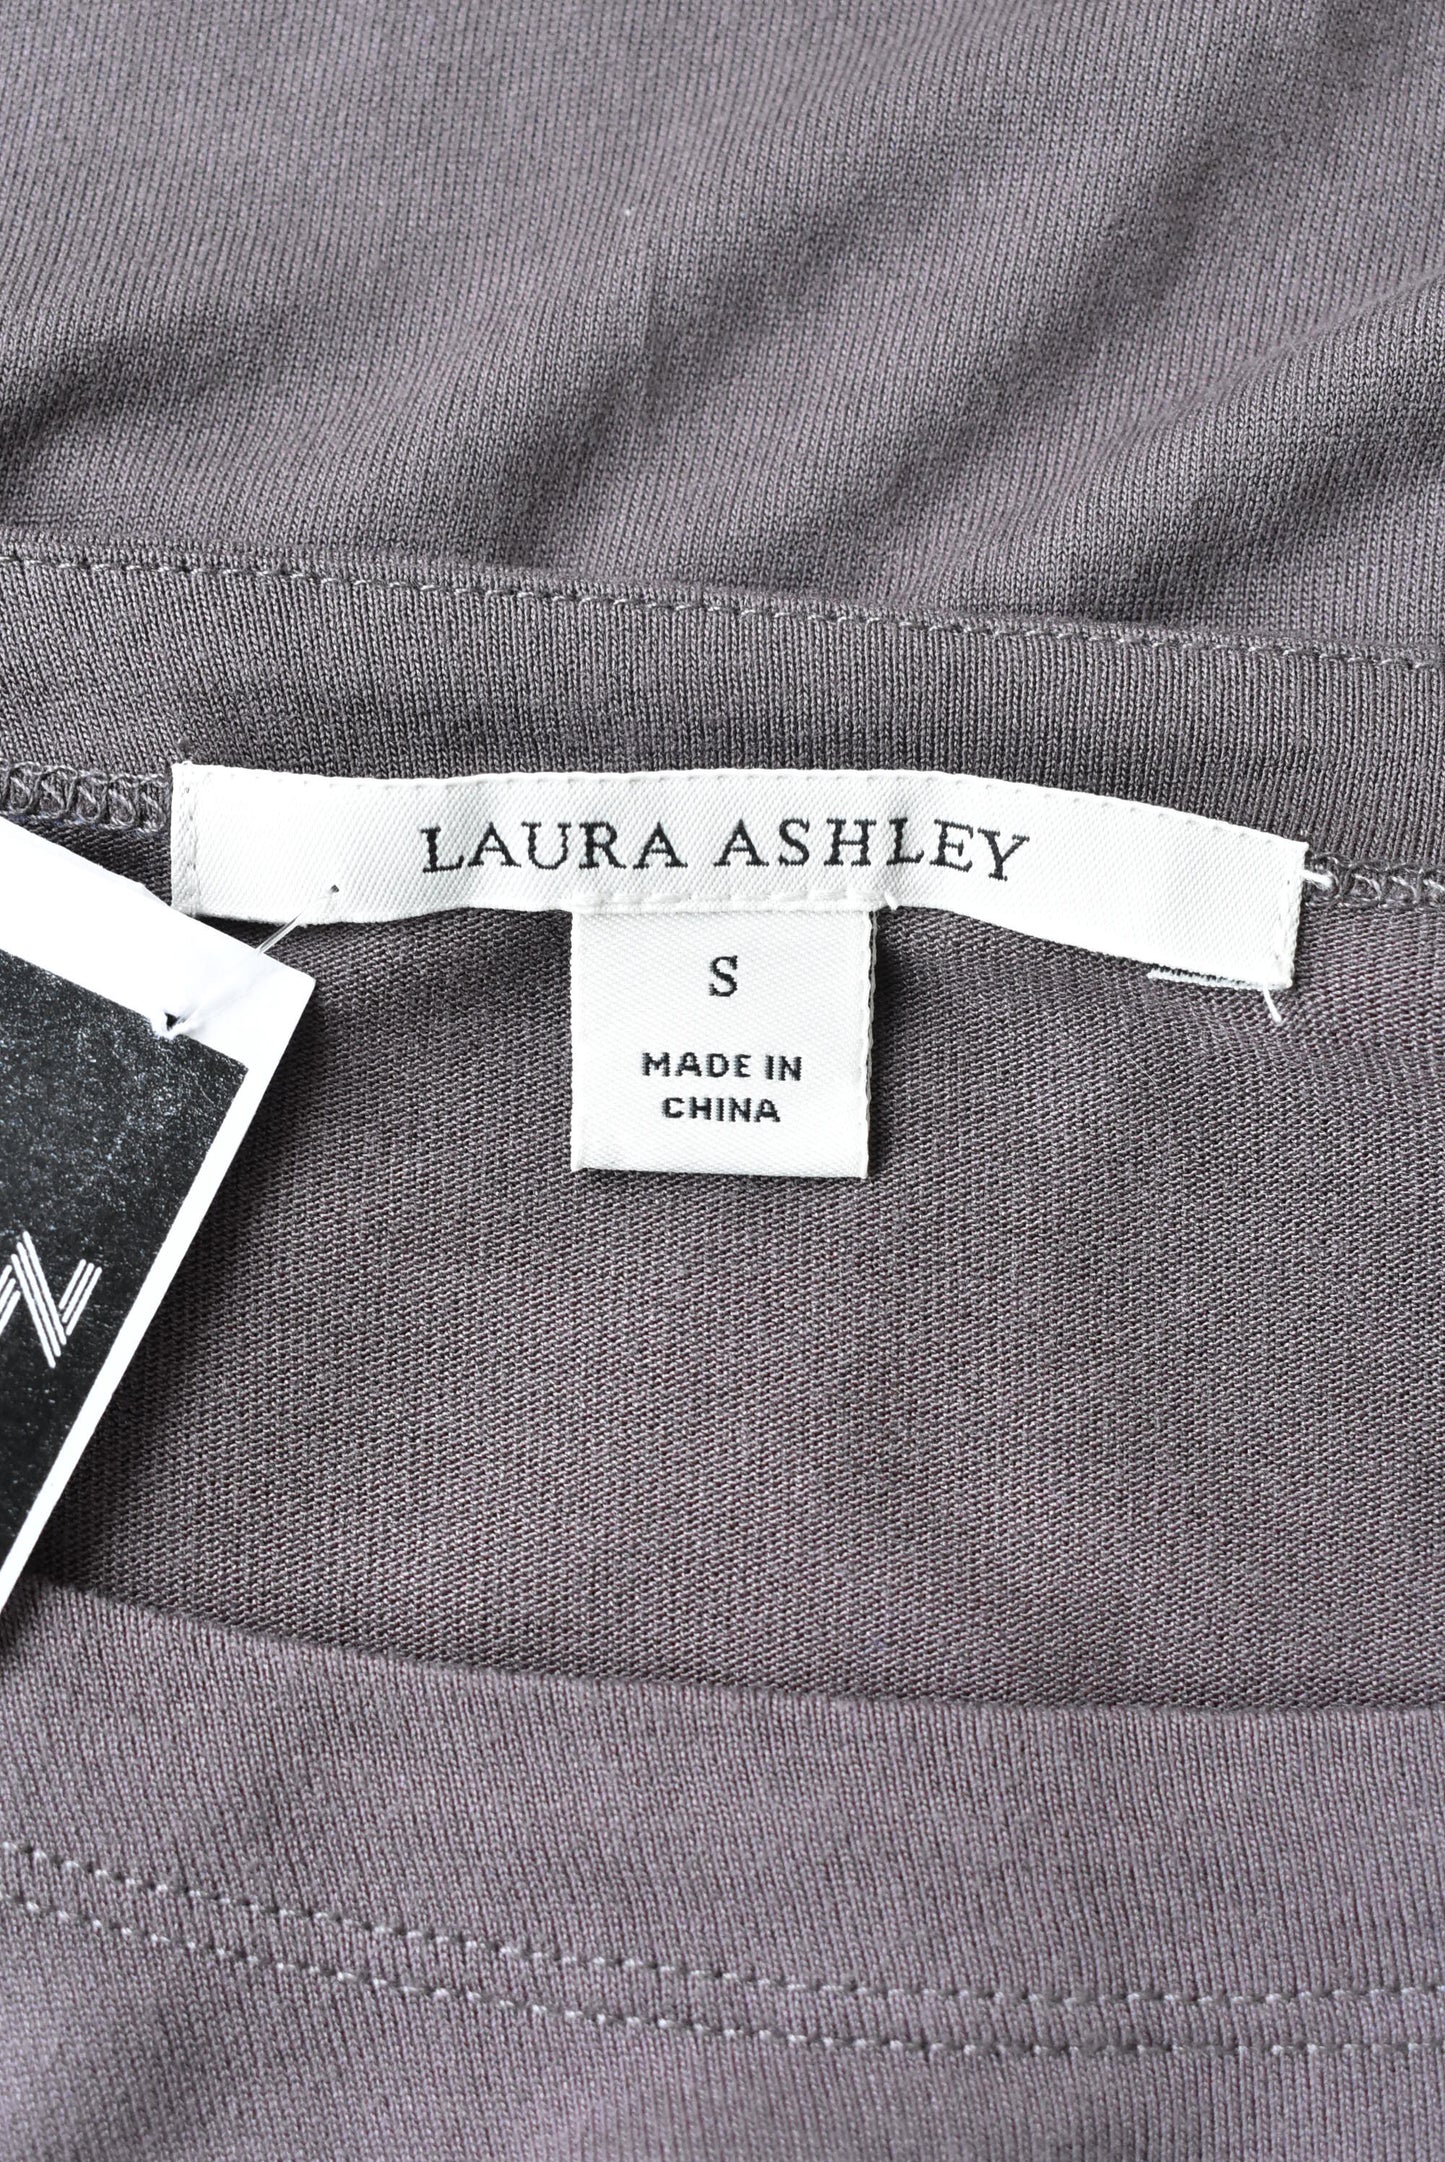 Laura Ashley sheer panel grey top, size S